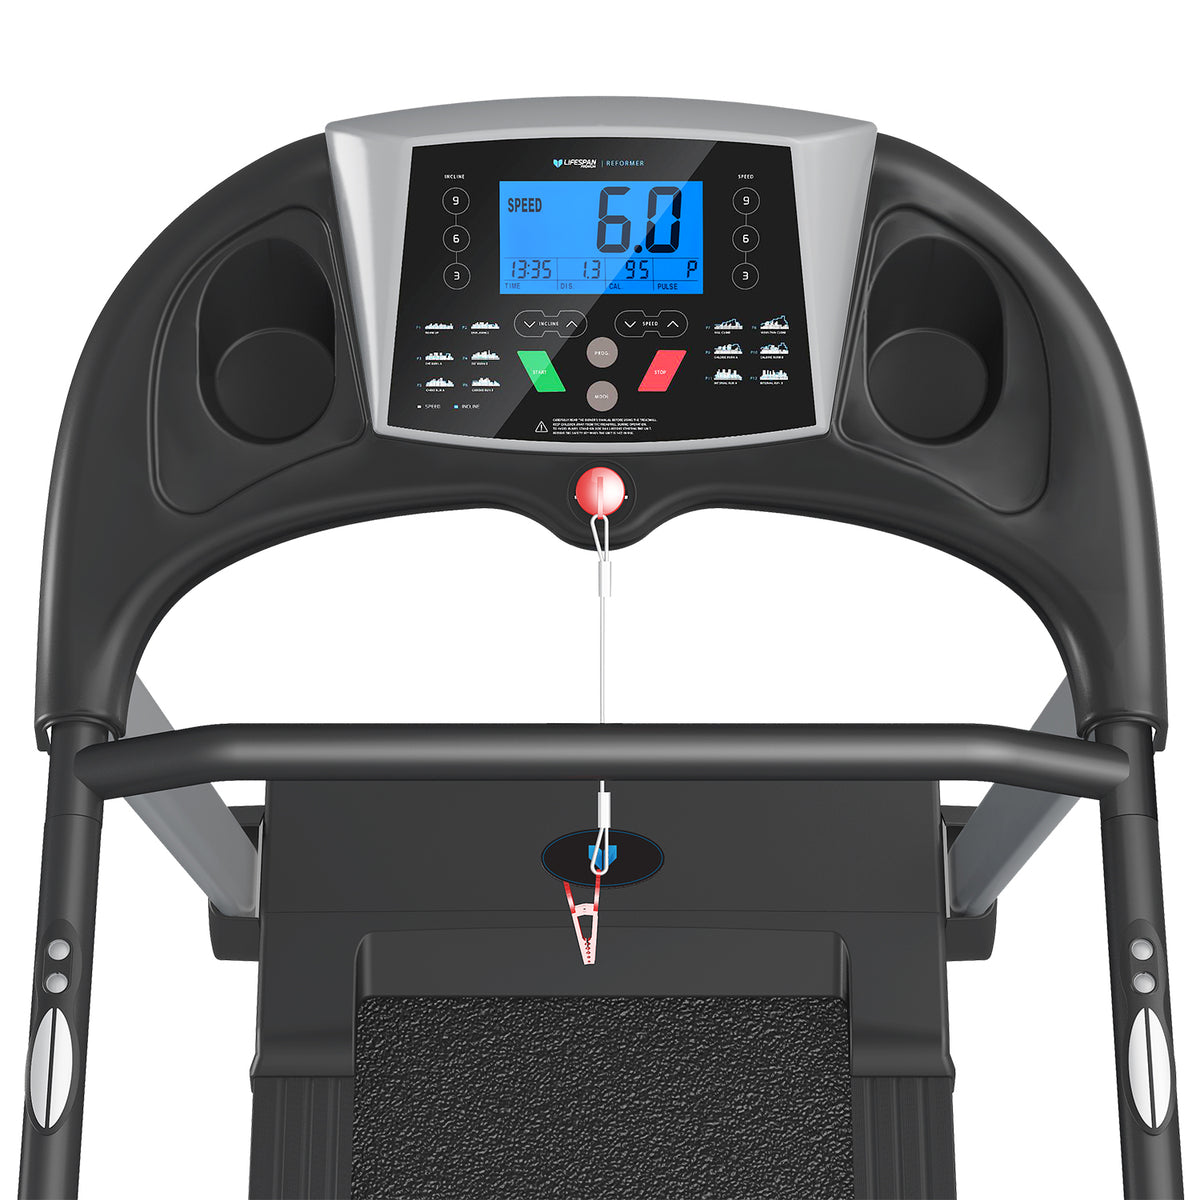 Lifespan Fitness Reformer Treadmill